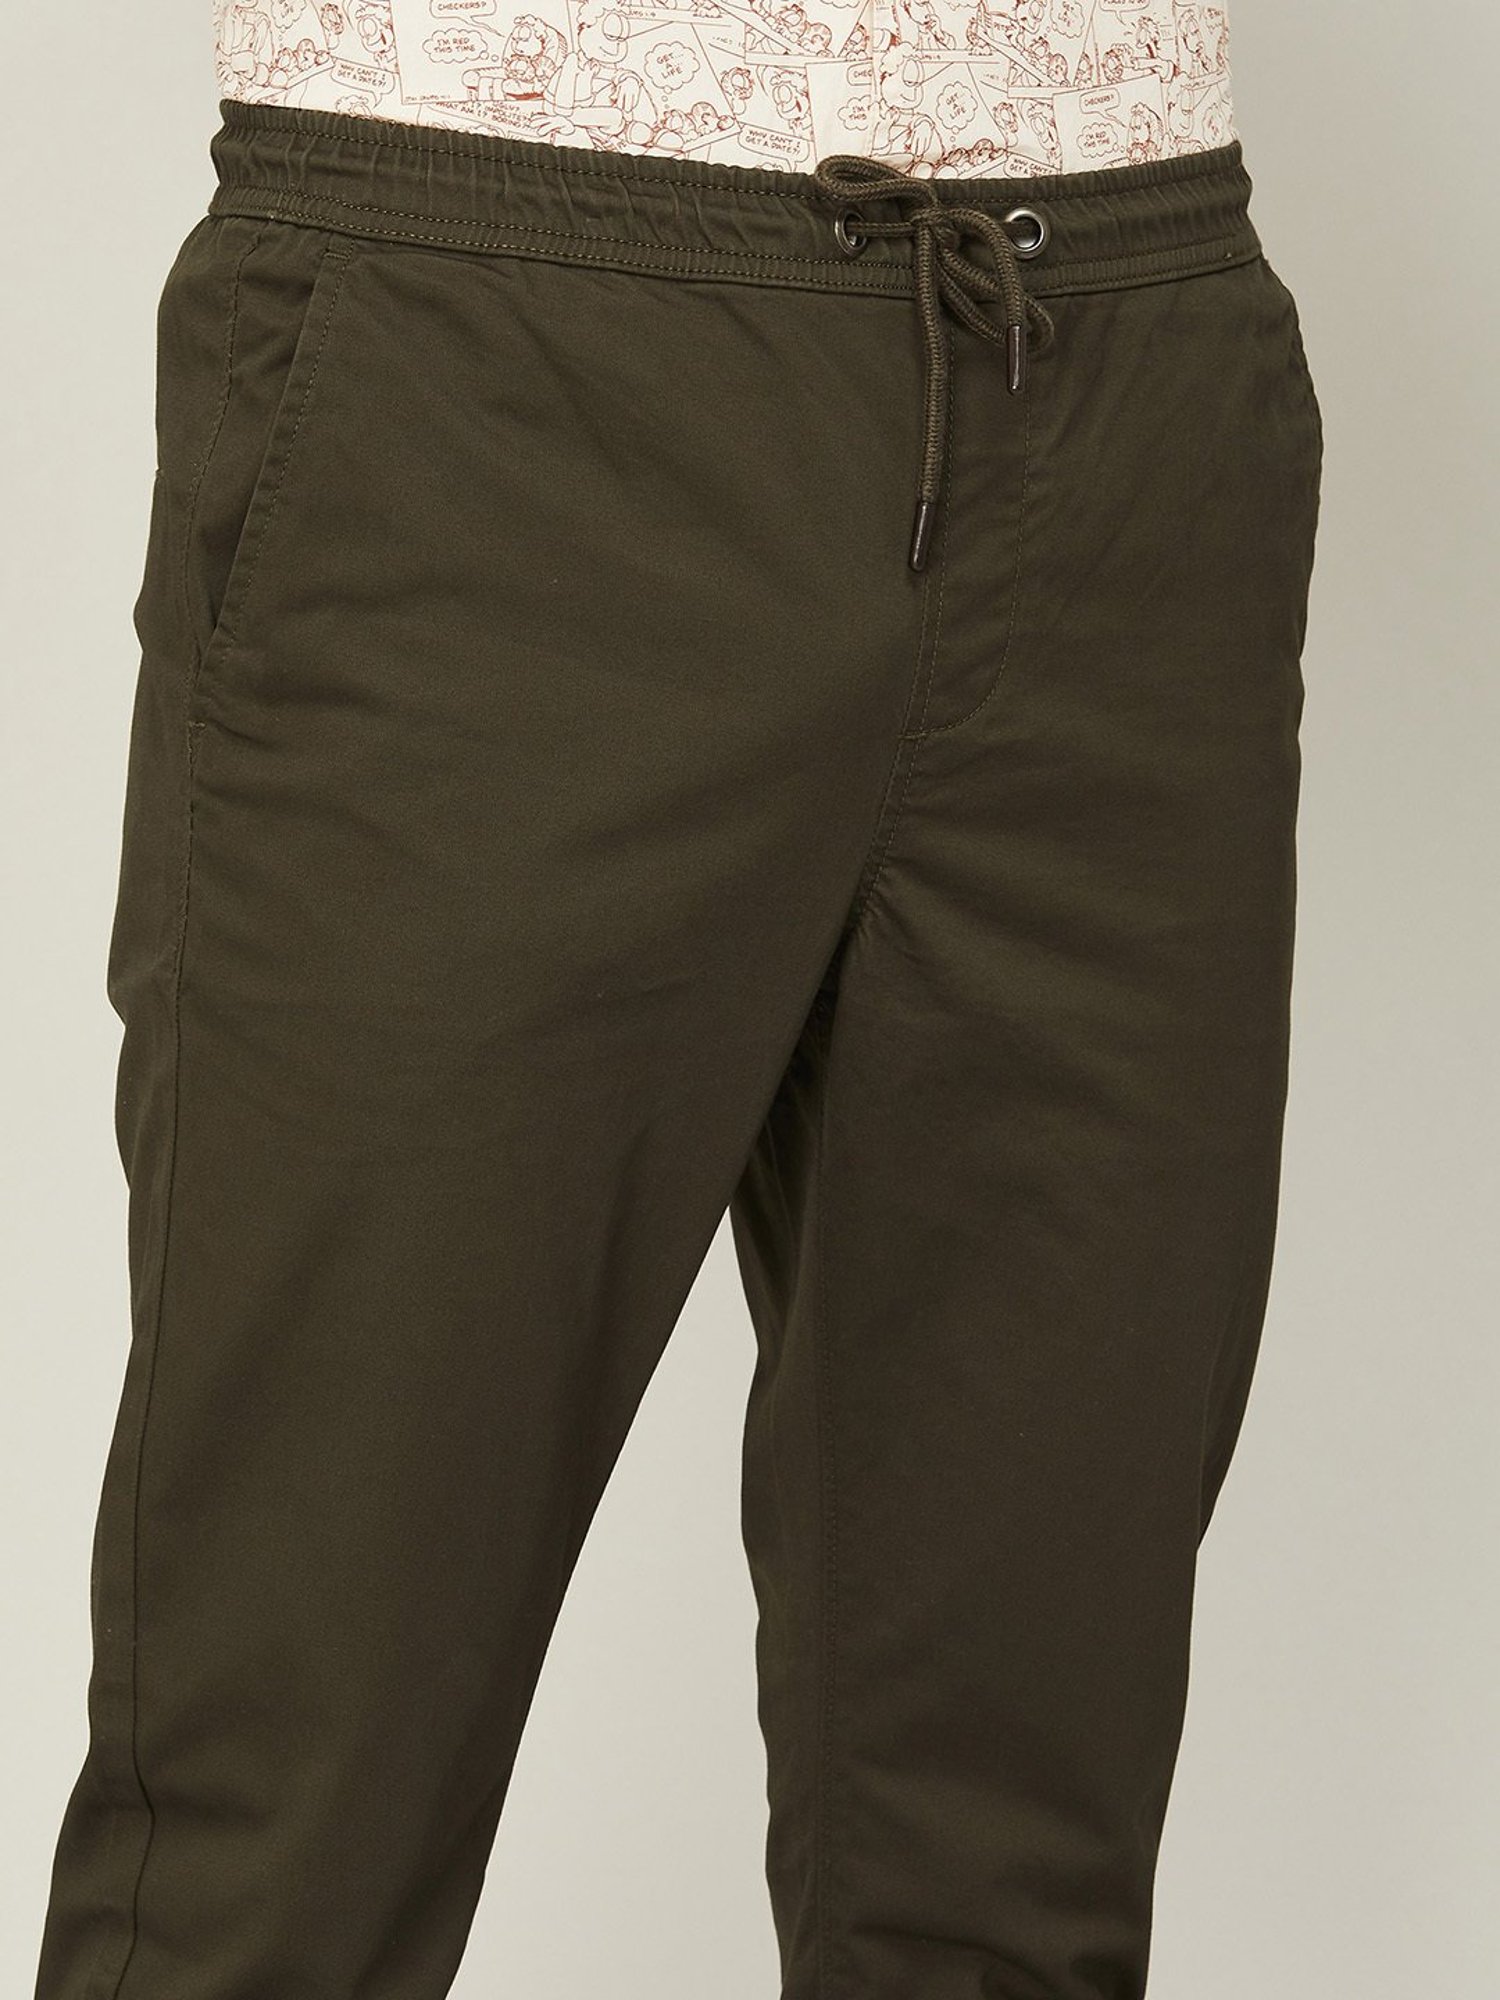 Hosiery Pant & Trousers Baby boys bottom wear at Rs 200/piece in Vadodara |  ID: 2852553601762